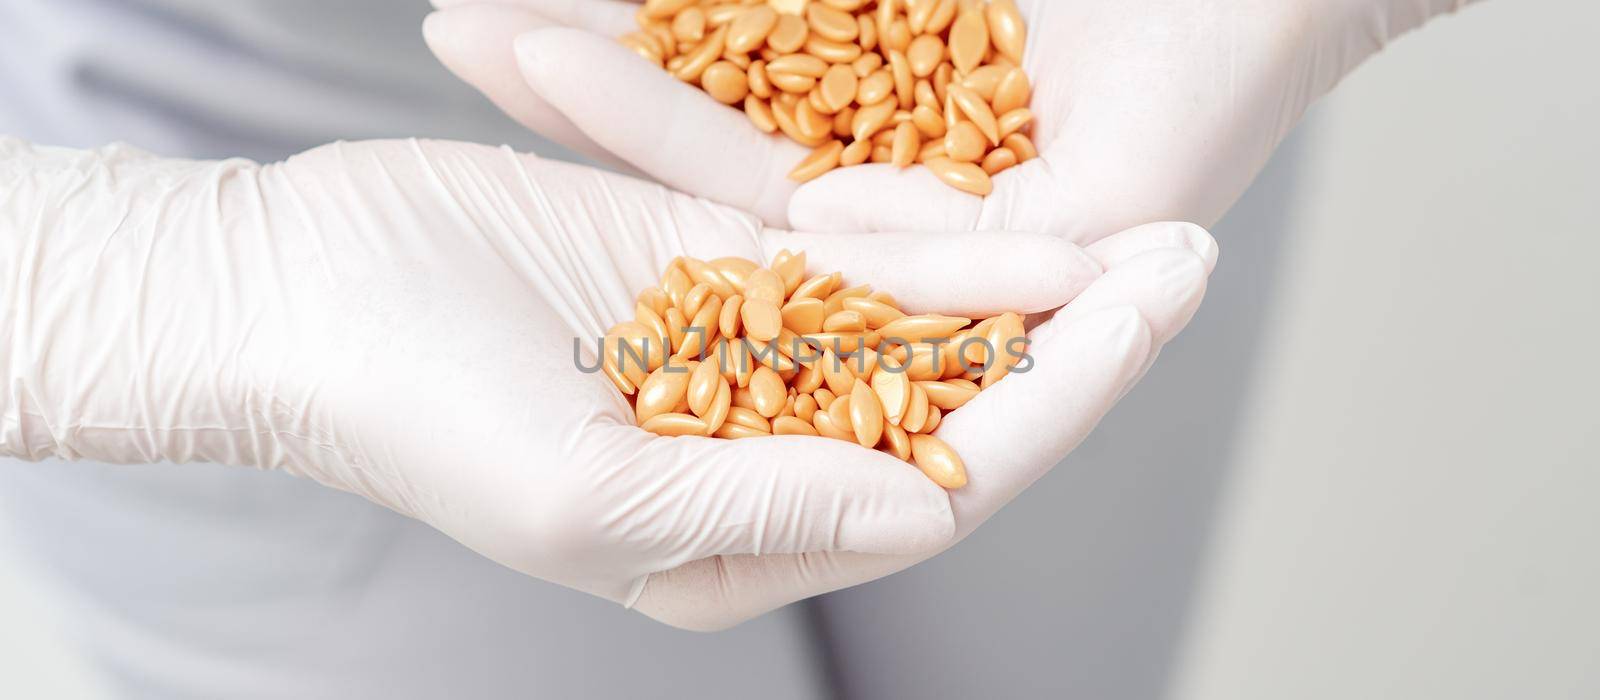 Wax beans or seeds in human hands by okskukuruza